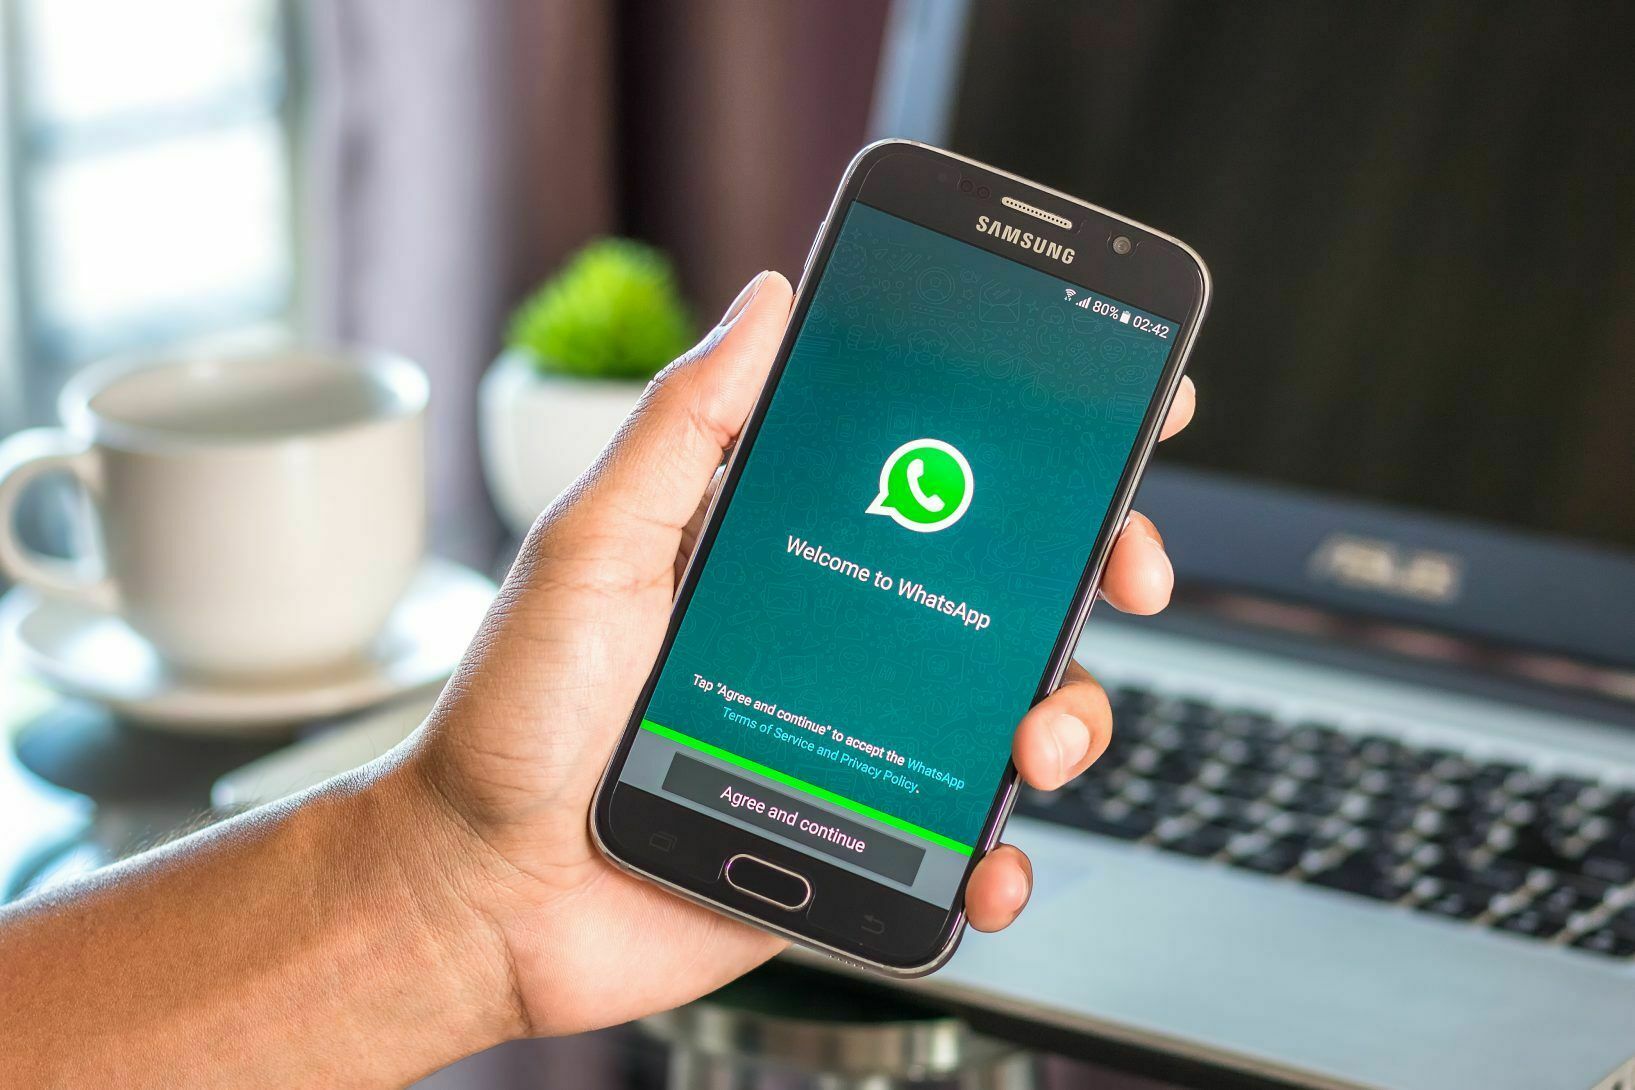 Росакачество предупреждает: WhatsApp столь же опасен, сколь и популярен